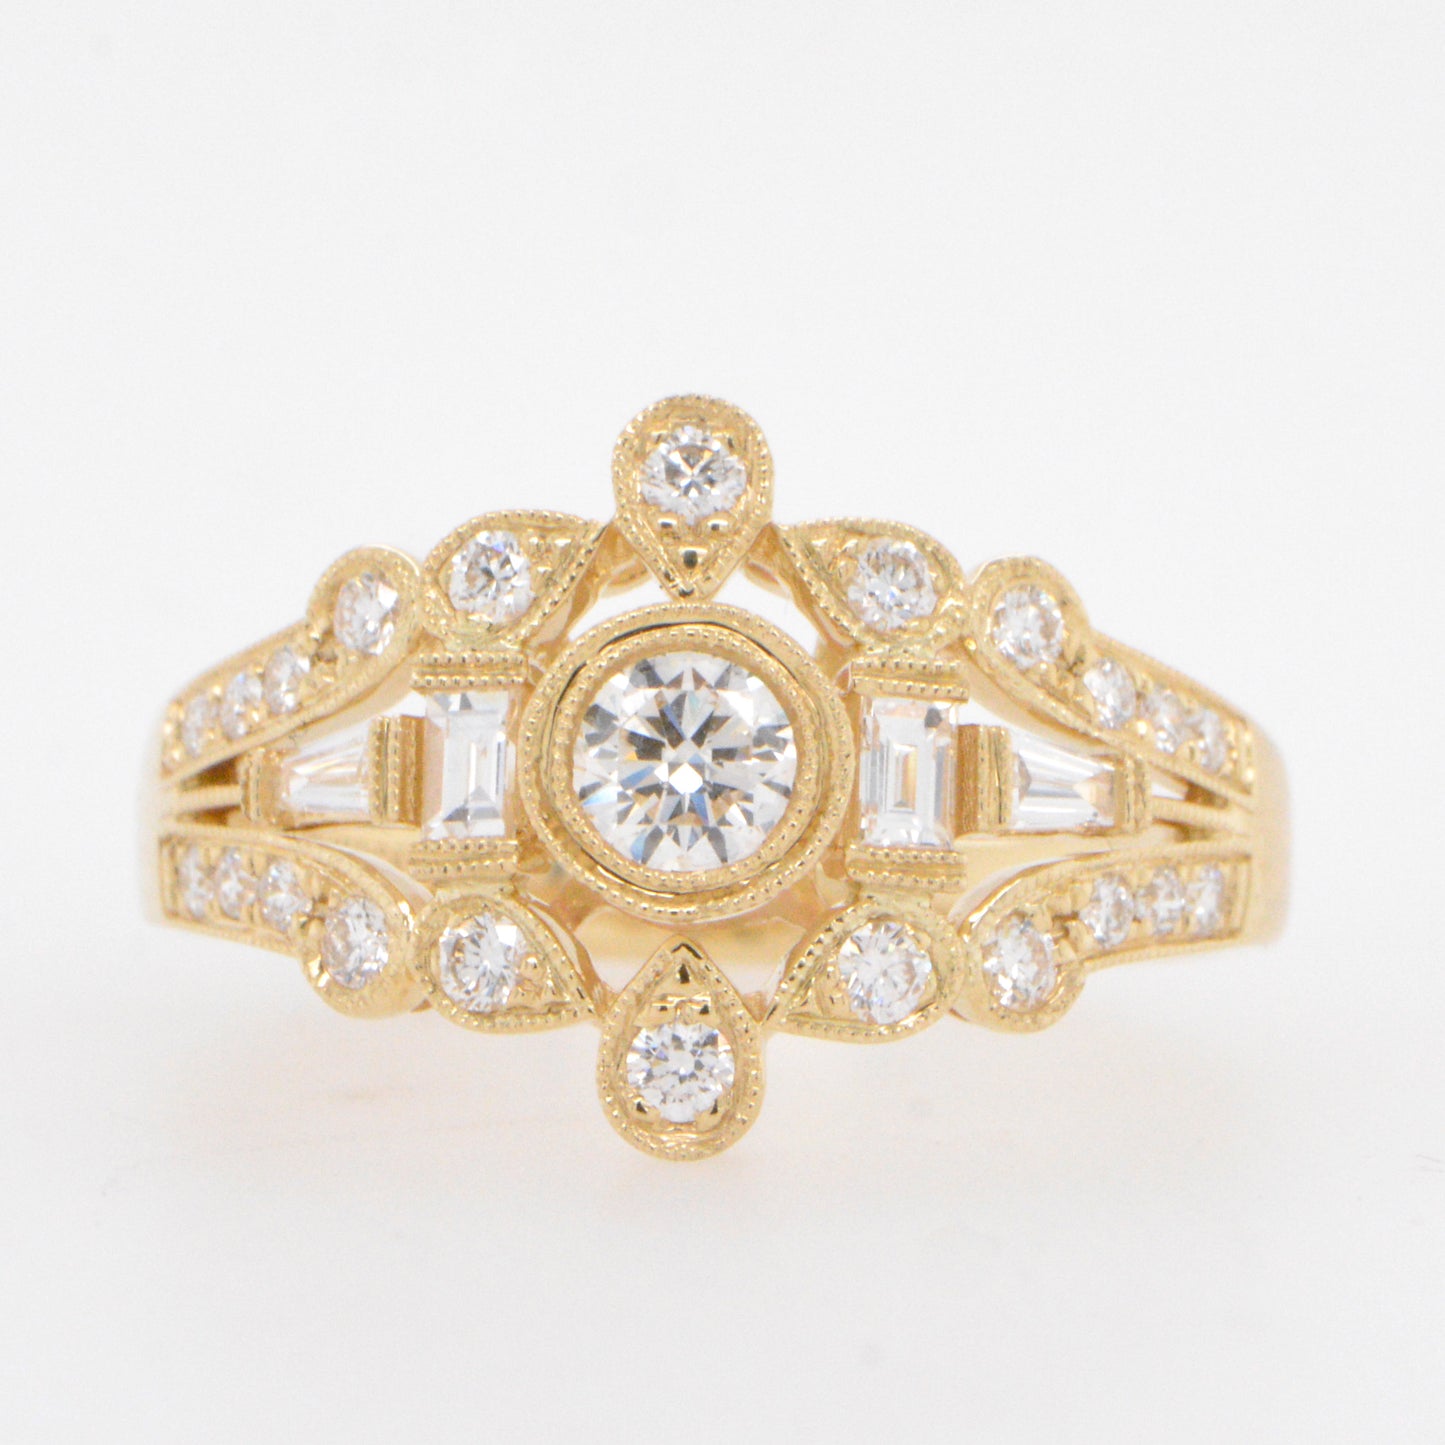 14K Yellow Gold Art Deco Inspired Diamond Engagement Ring